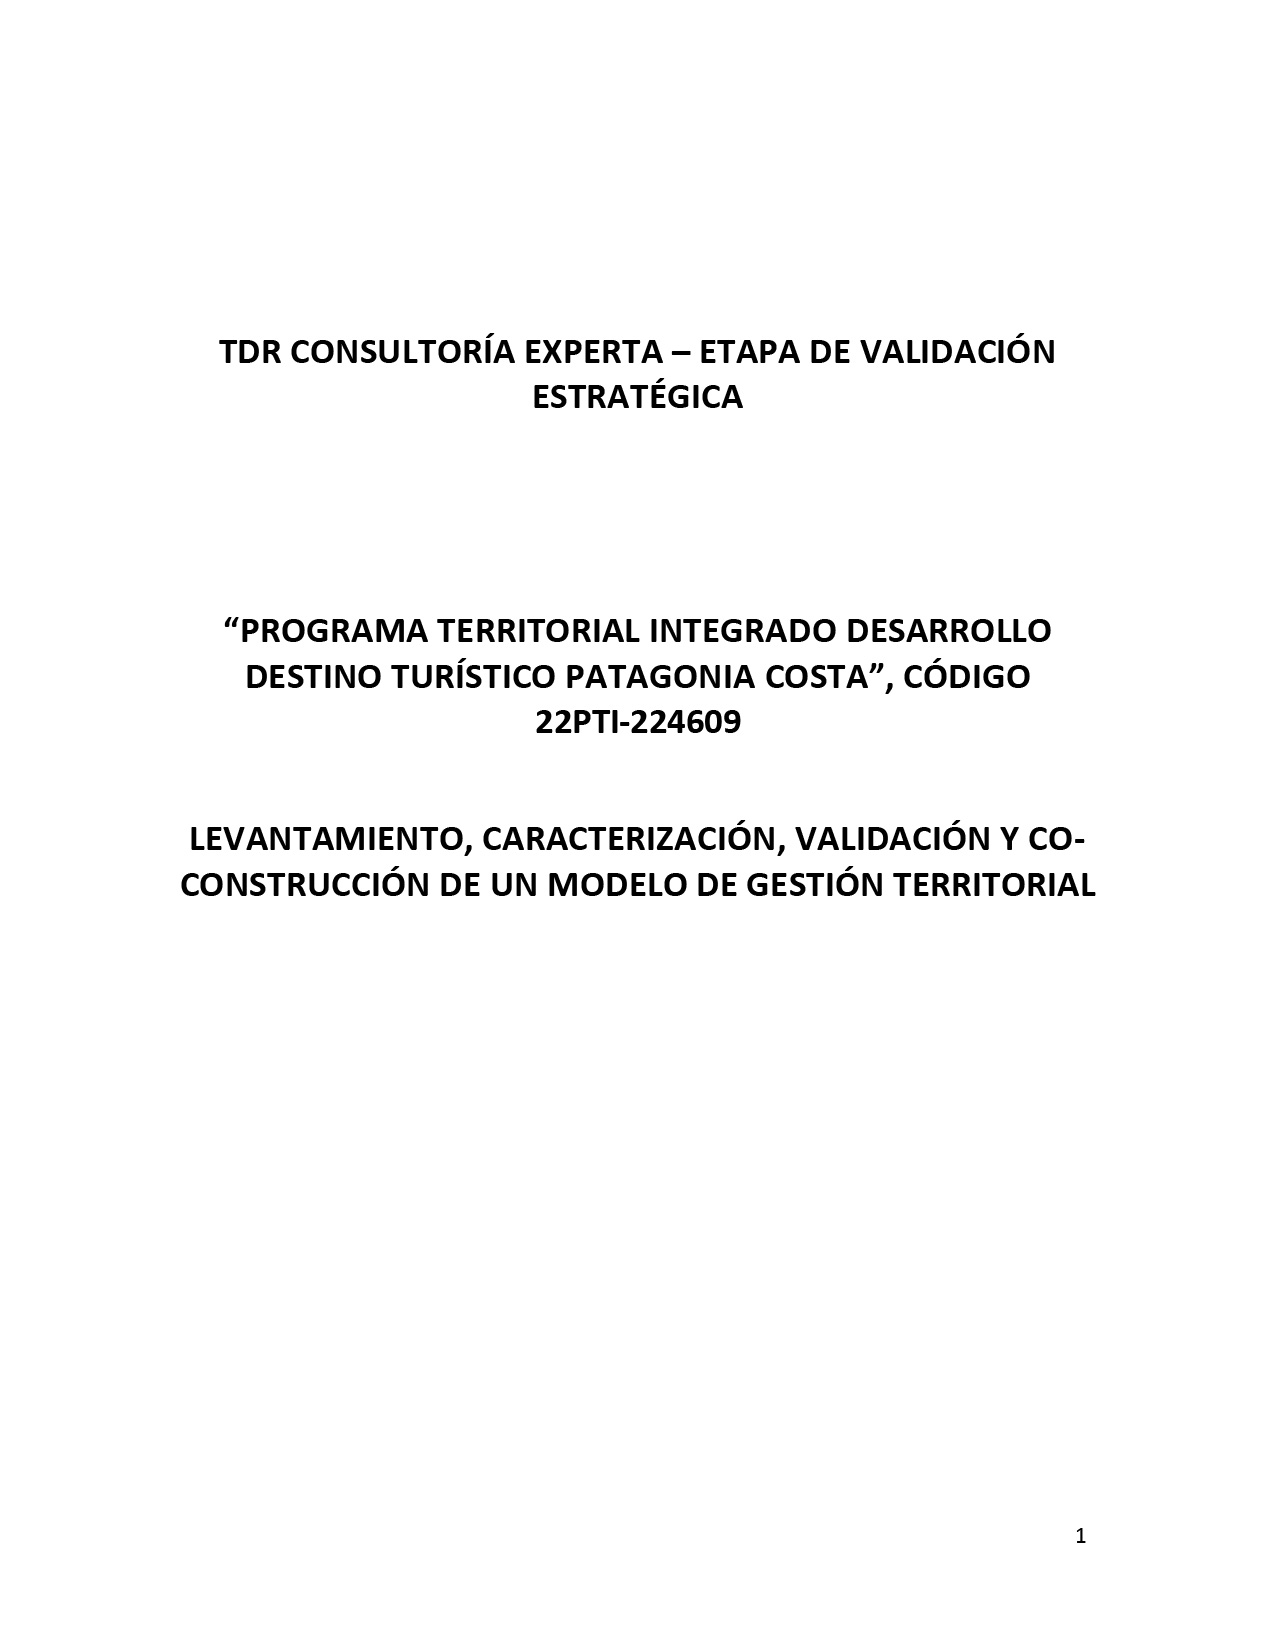 230104_TDR-Validacion-Estrategica PTI PATAGONIA COSTA FINALES-v2-01